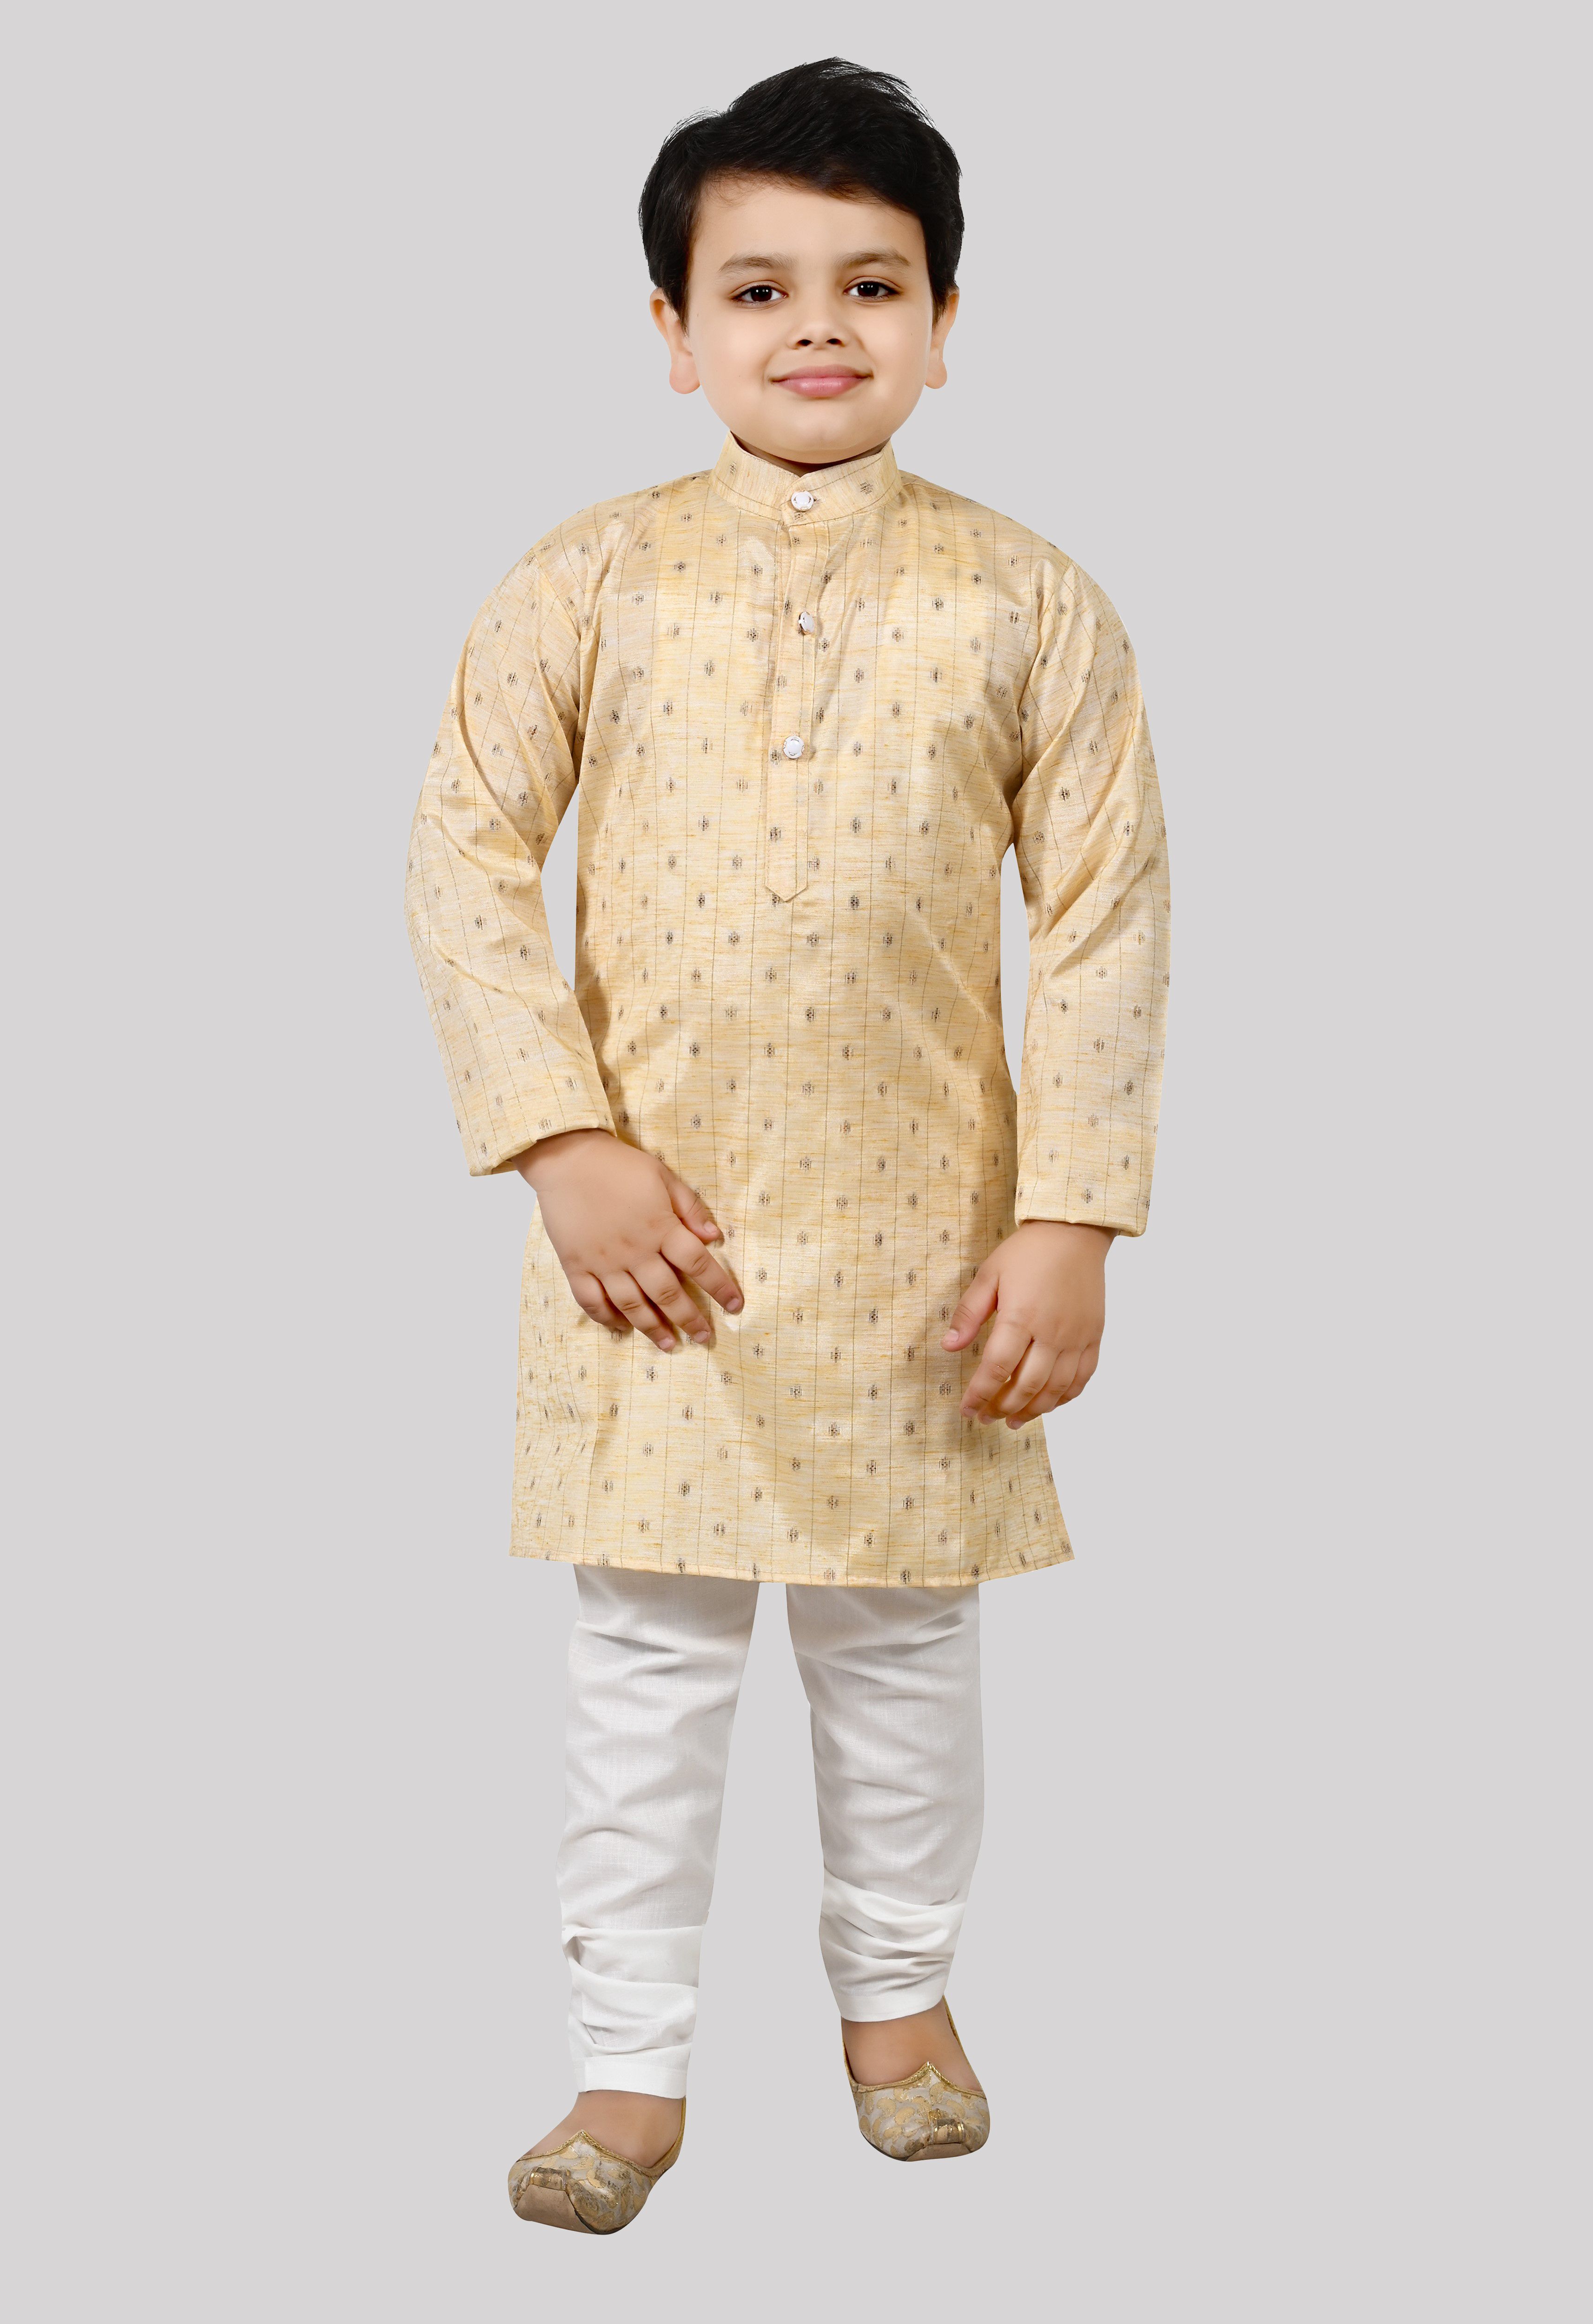     			Arshia Fashions - Yellow Cotton Blend Boys Kurta Sets ( Pack of 1 )